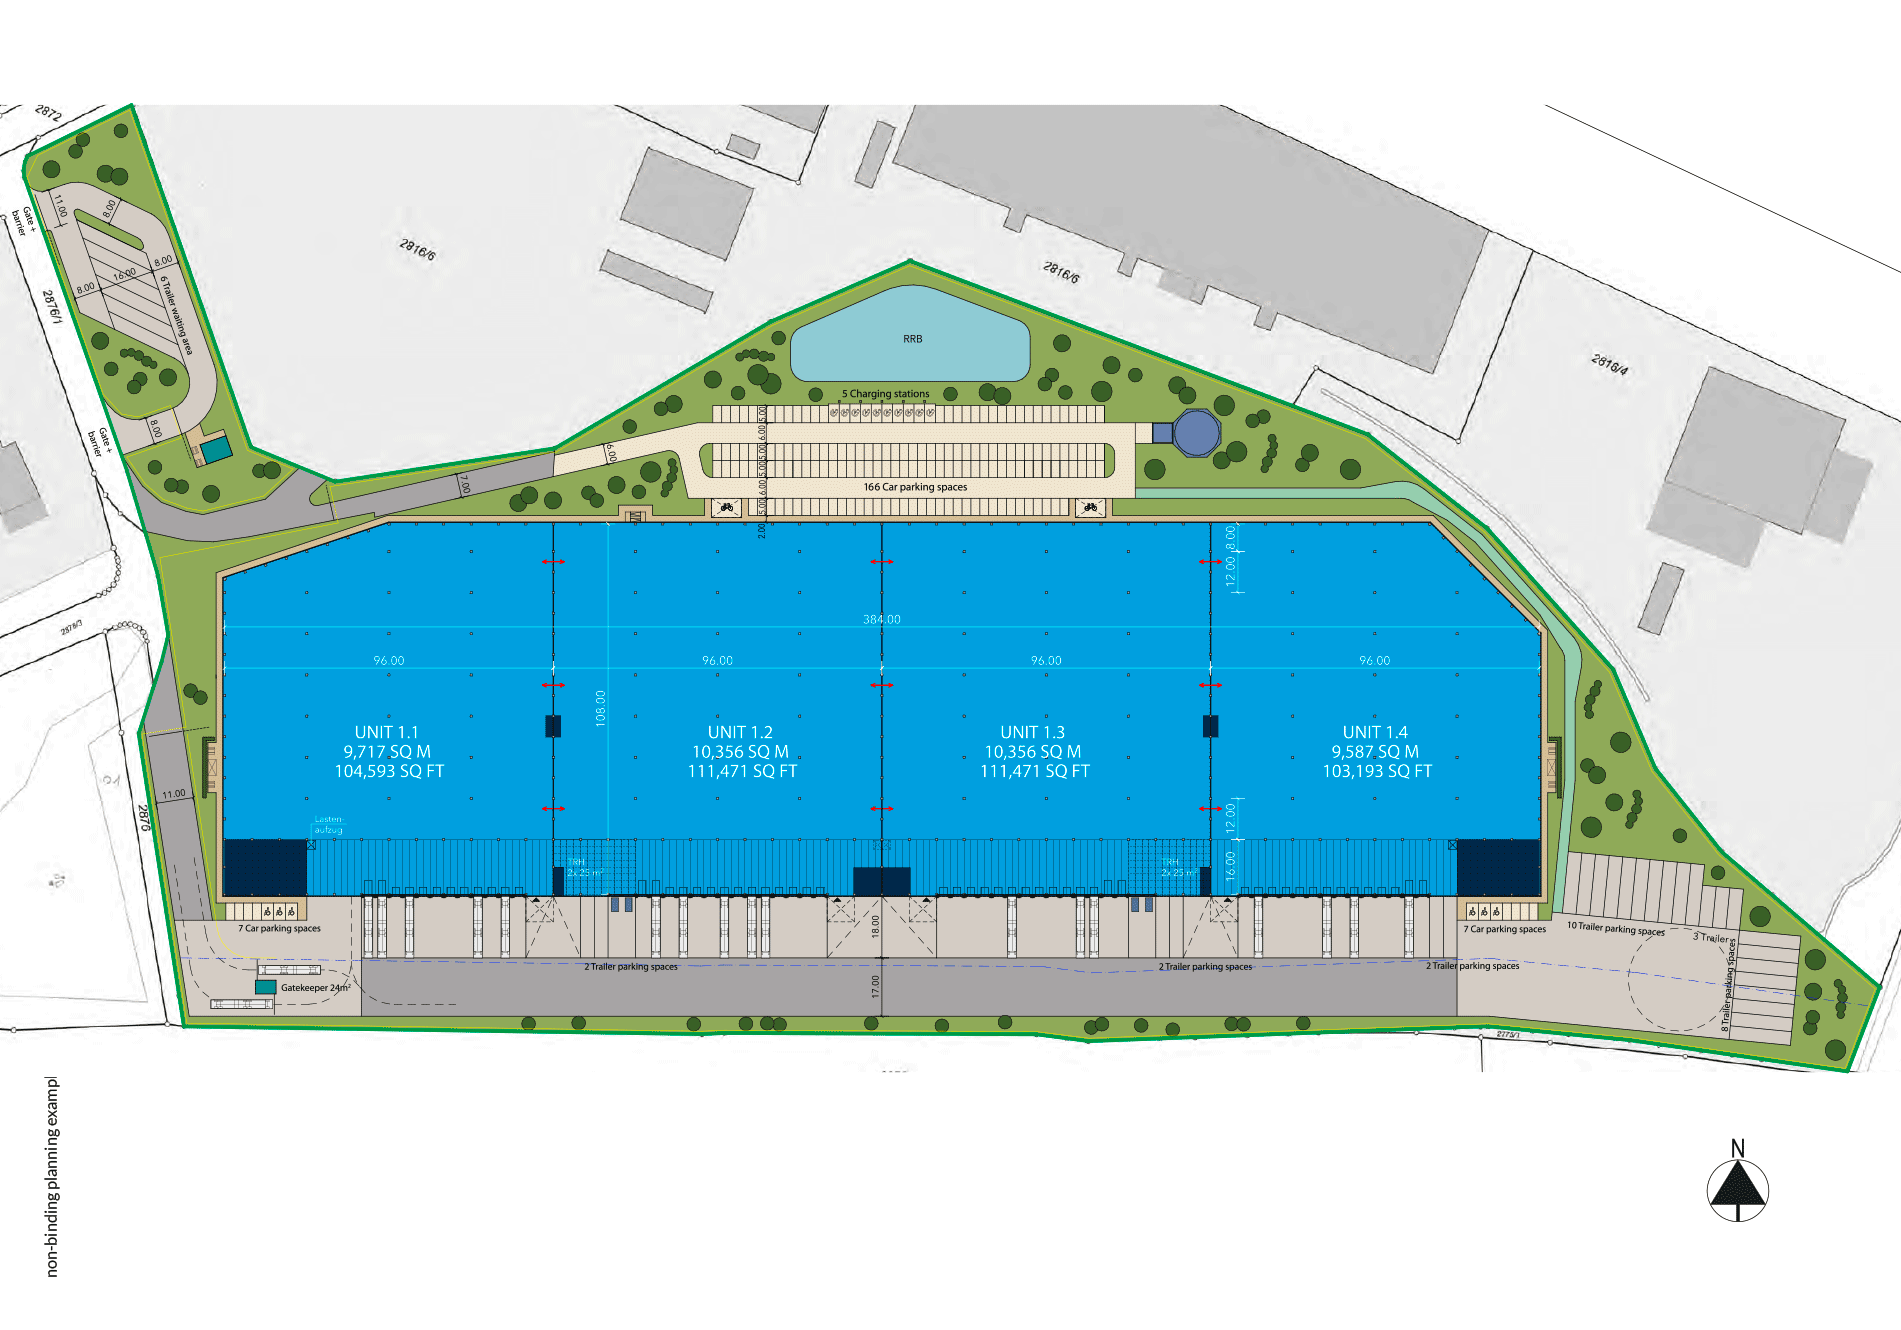 Floorplan of warehouse units in Coburg.